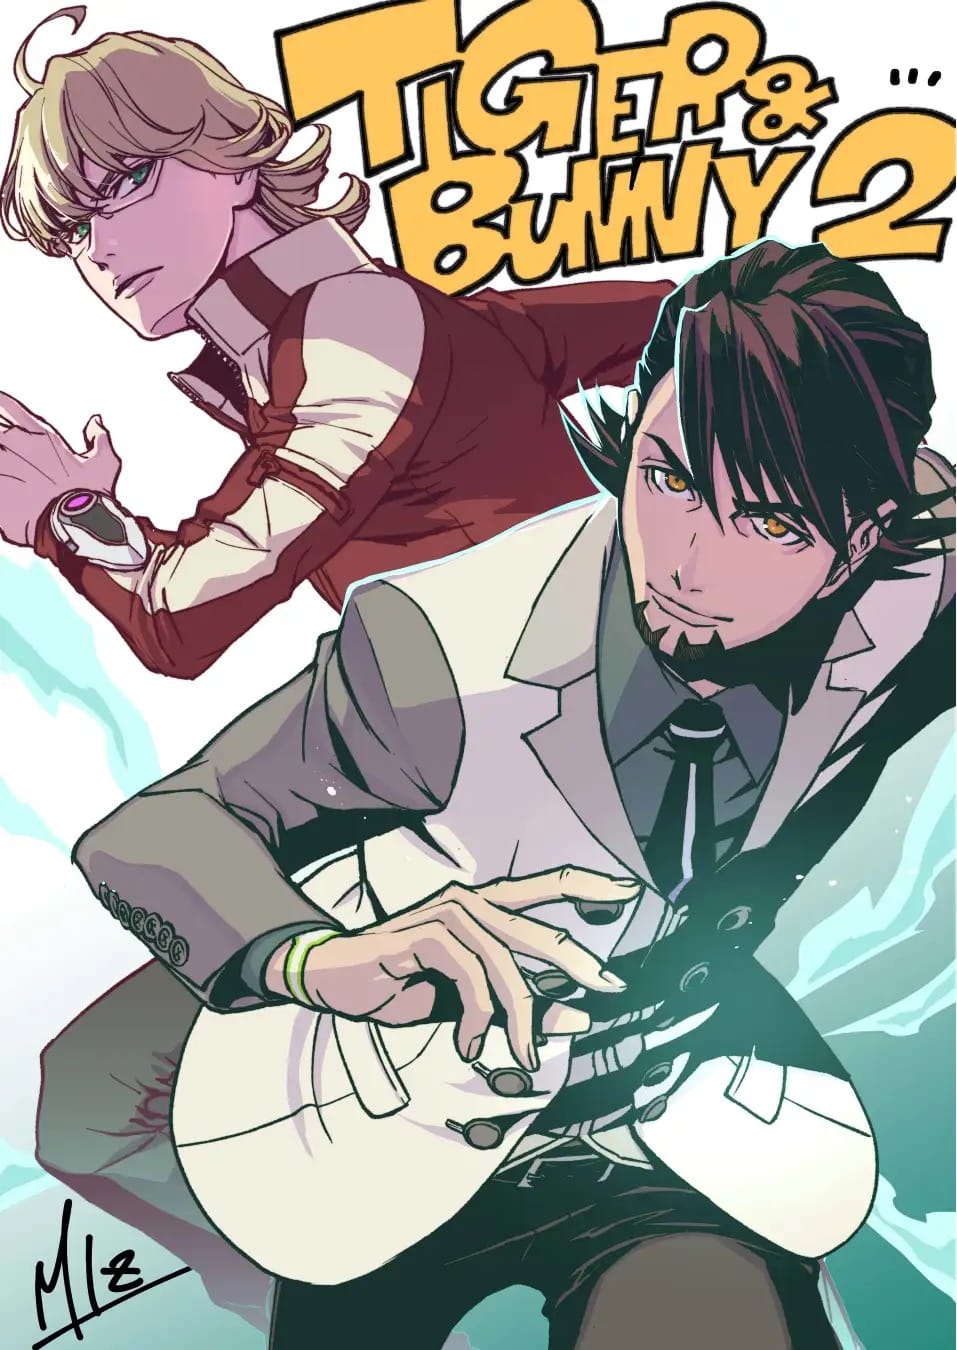 TIGER & BUNNY 2 (タイバニ2) コミカライズ 4月5日連載開始! 新装版も!